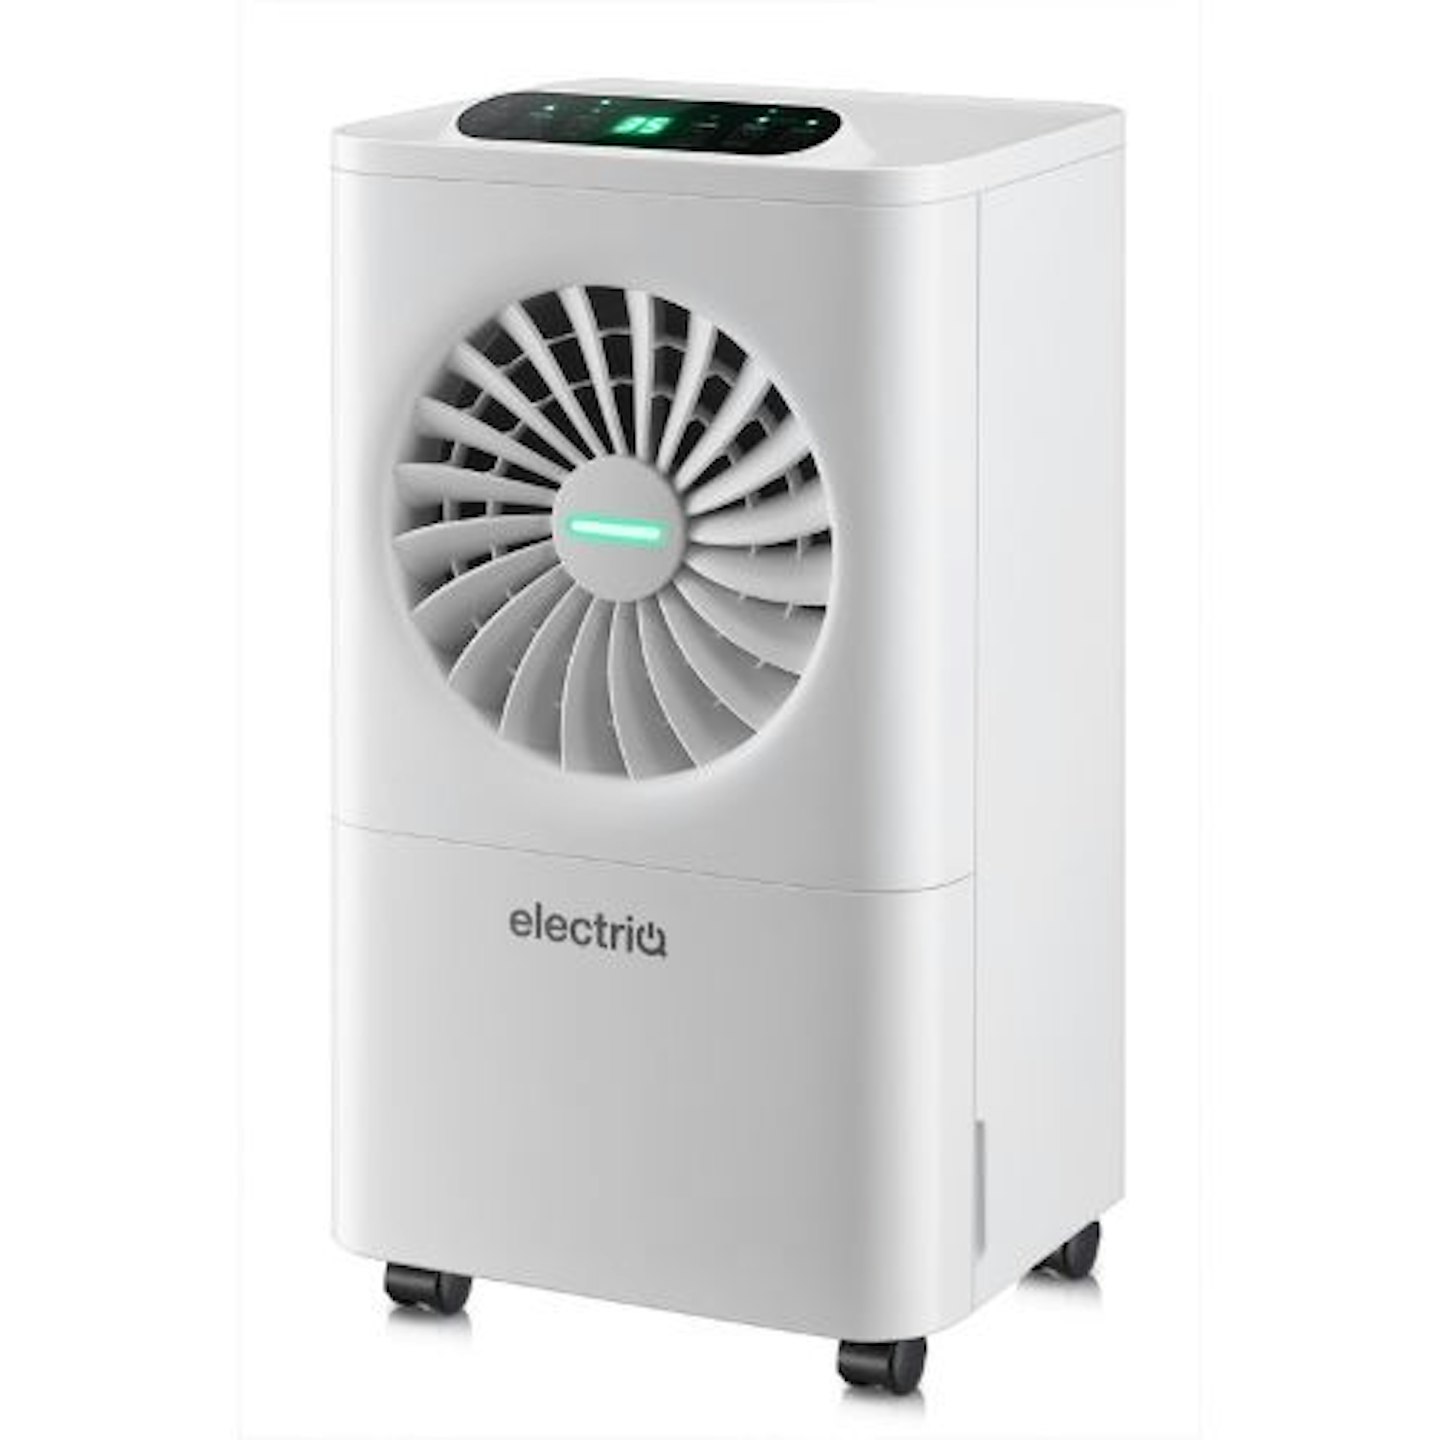 electriQ 10L Laundry Dehumidifier with Air Purifier Mode